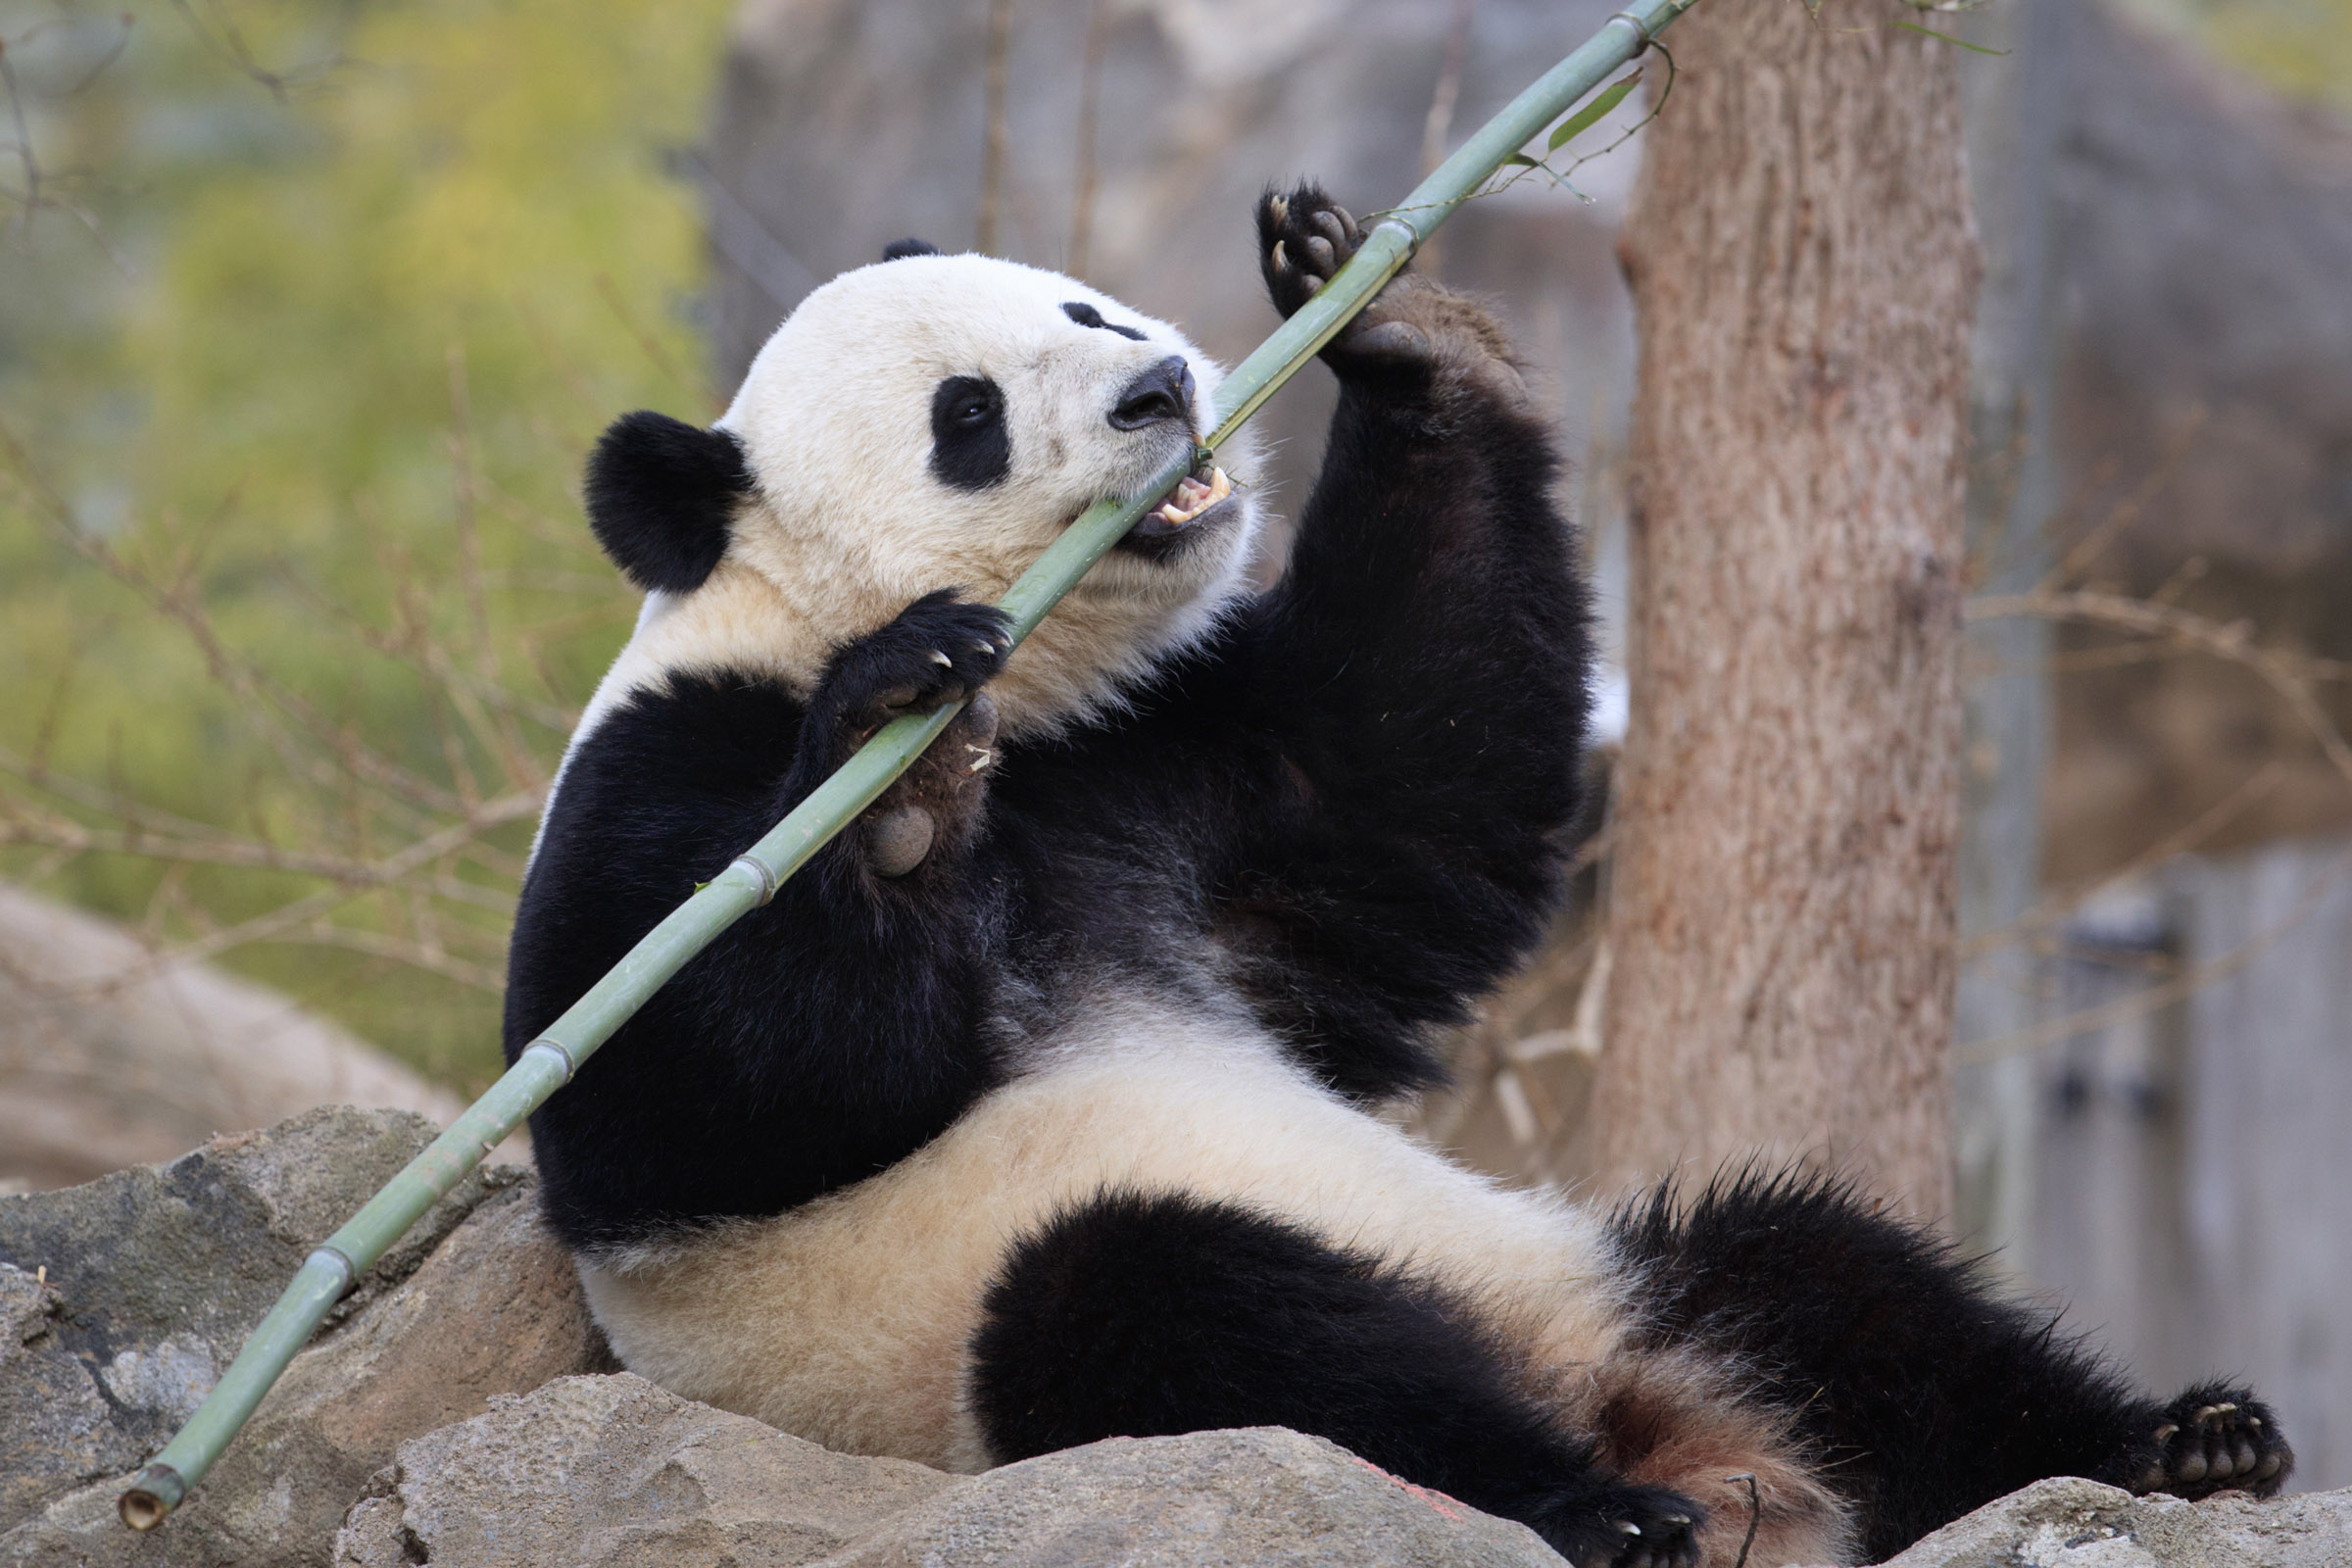 Giant panda BAO BAO leaves US to live in China